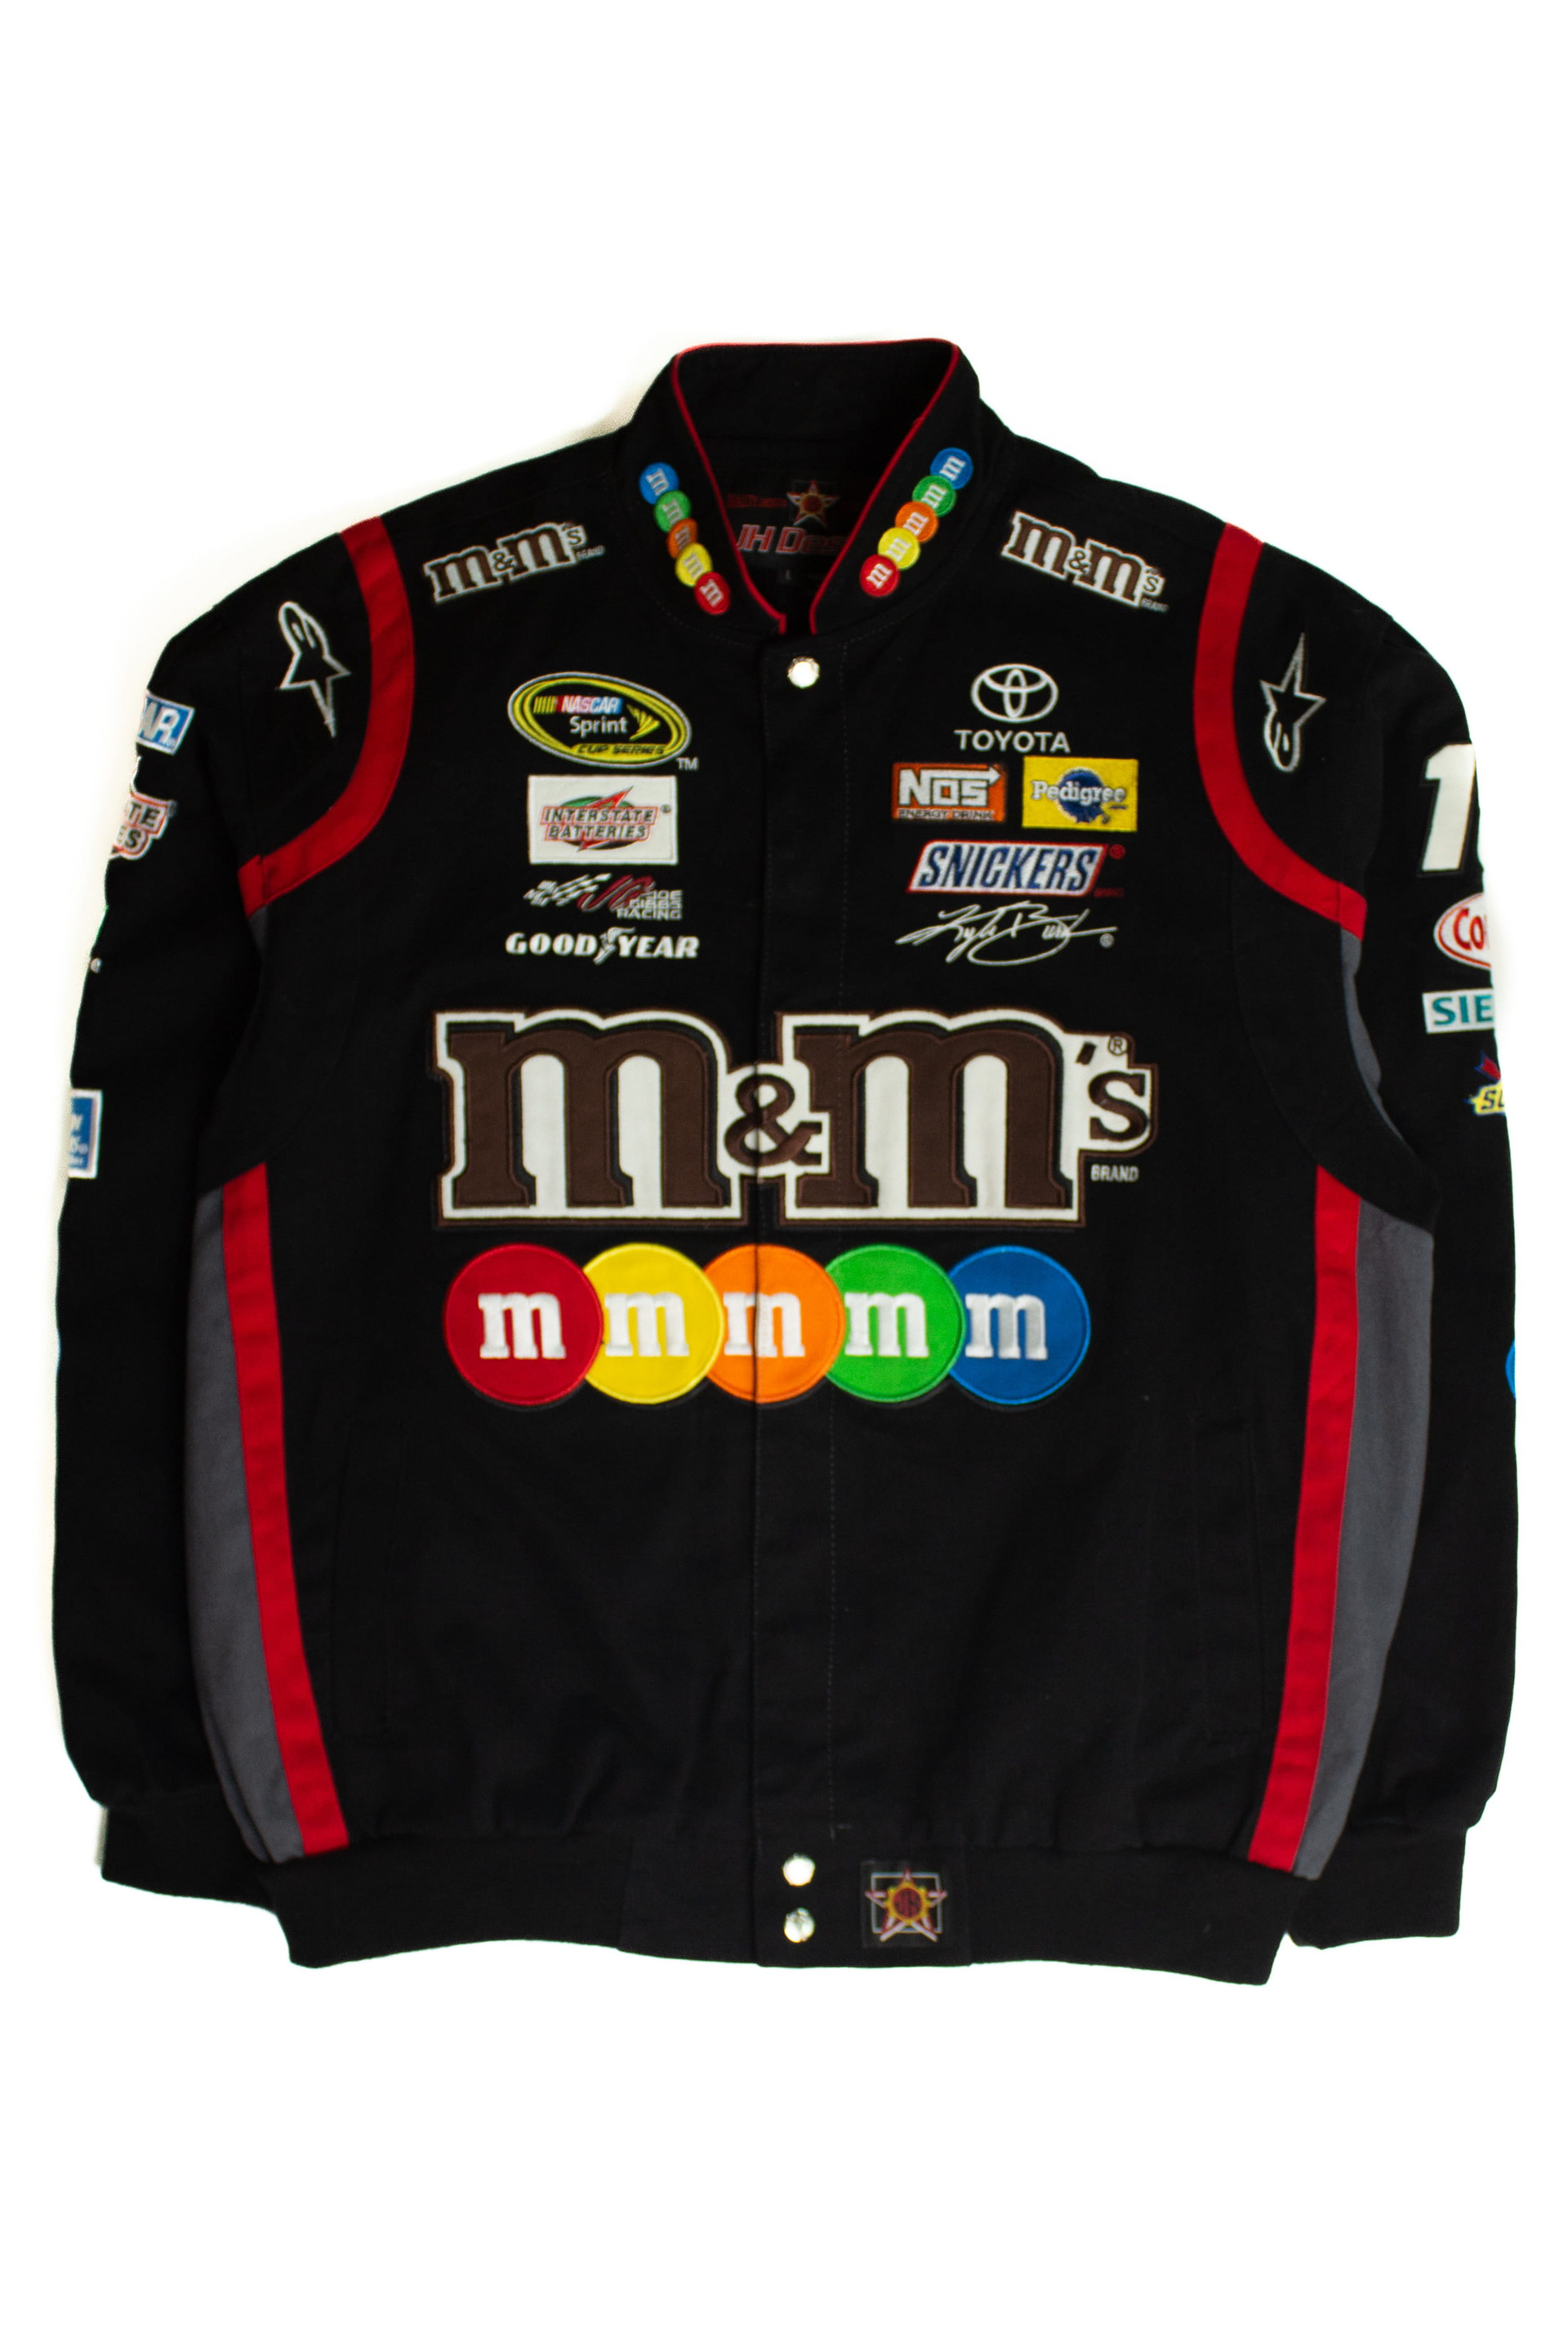 Kyle Busch M&M's NASCAR Jacket (2009) - Ragstock.com